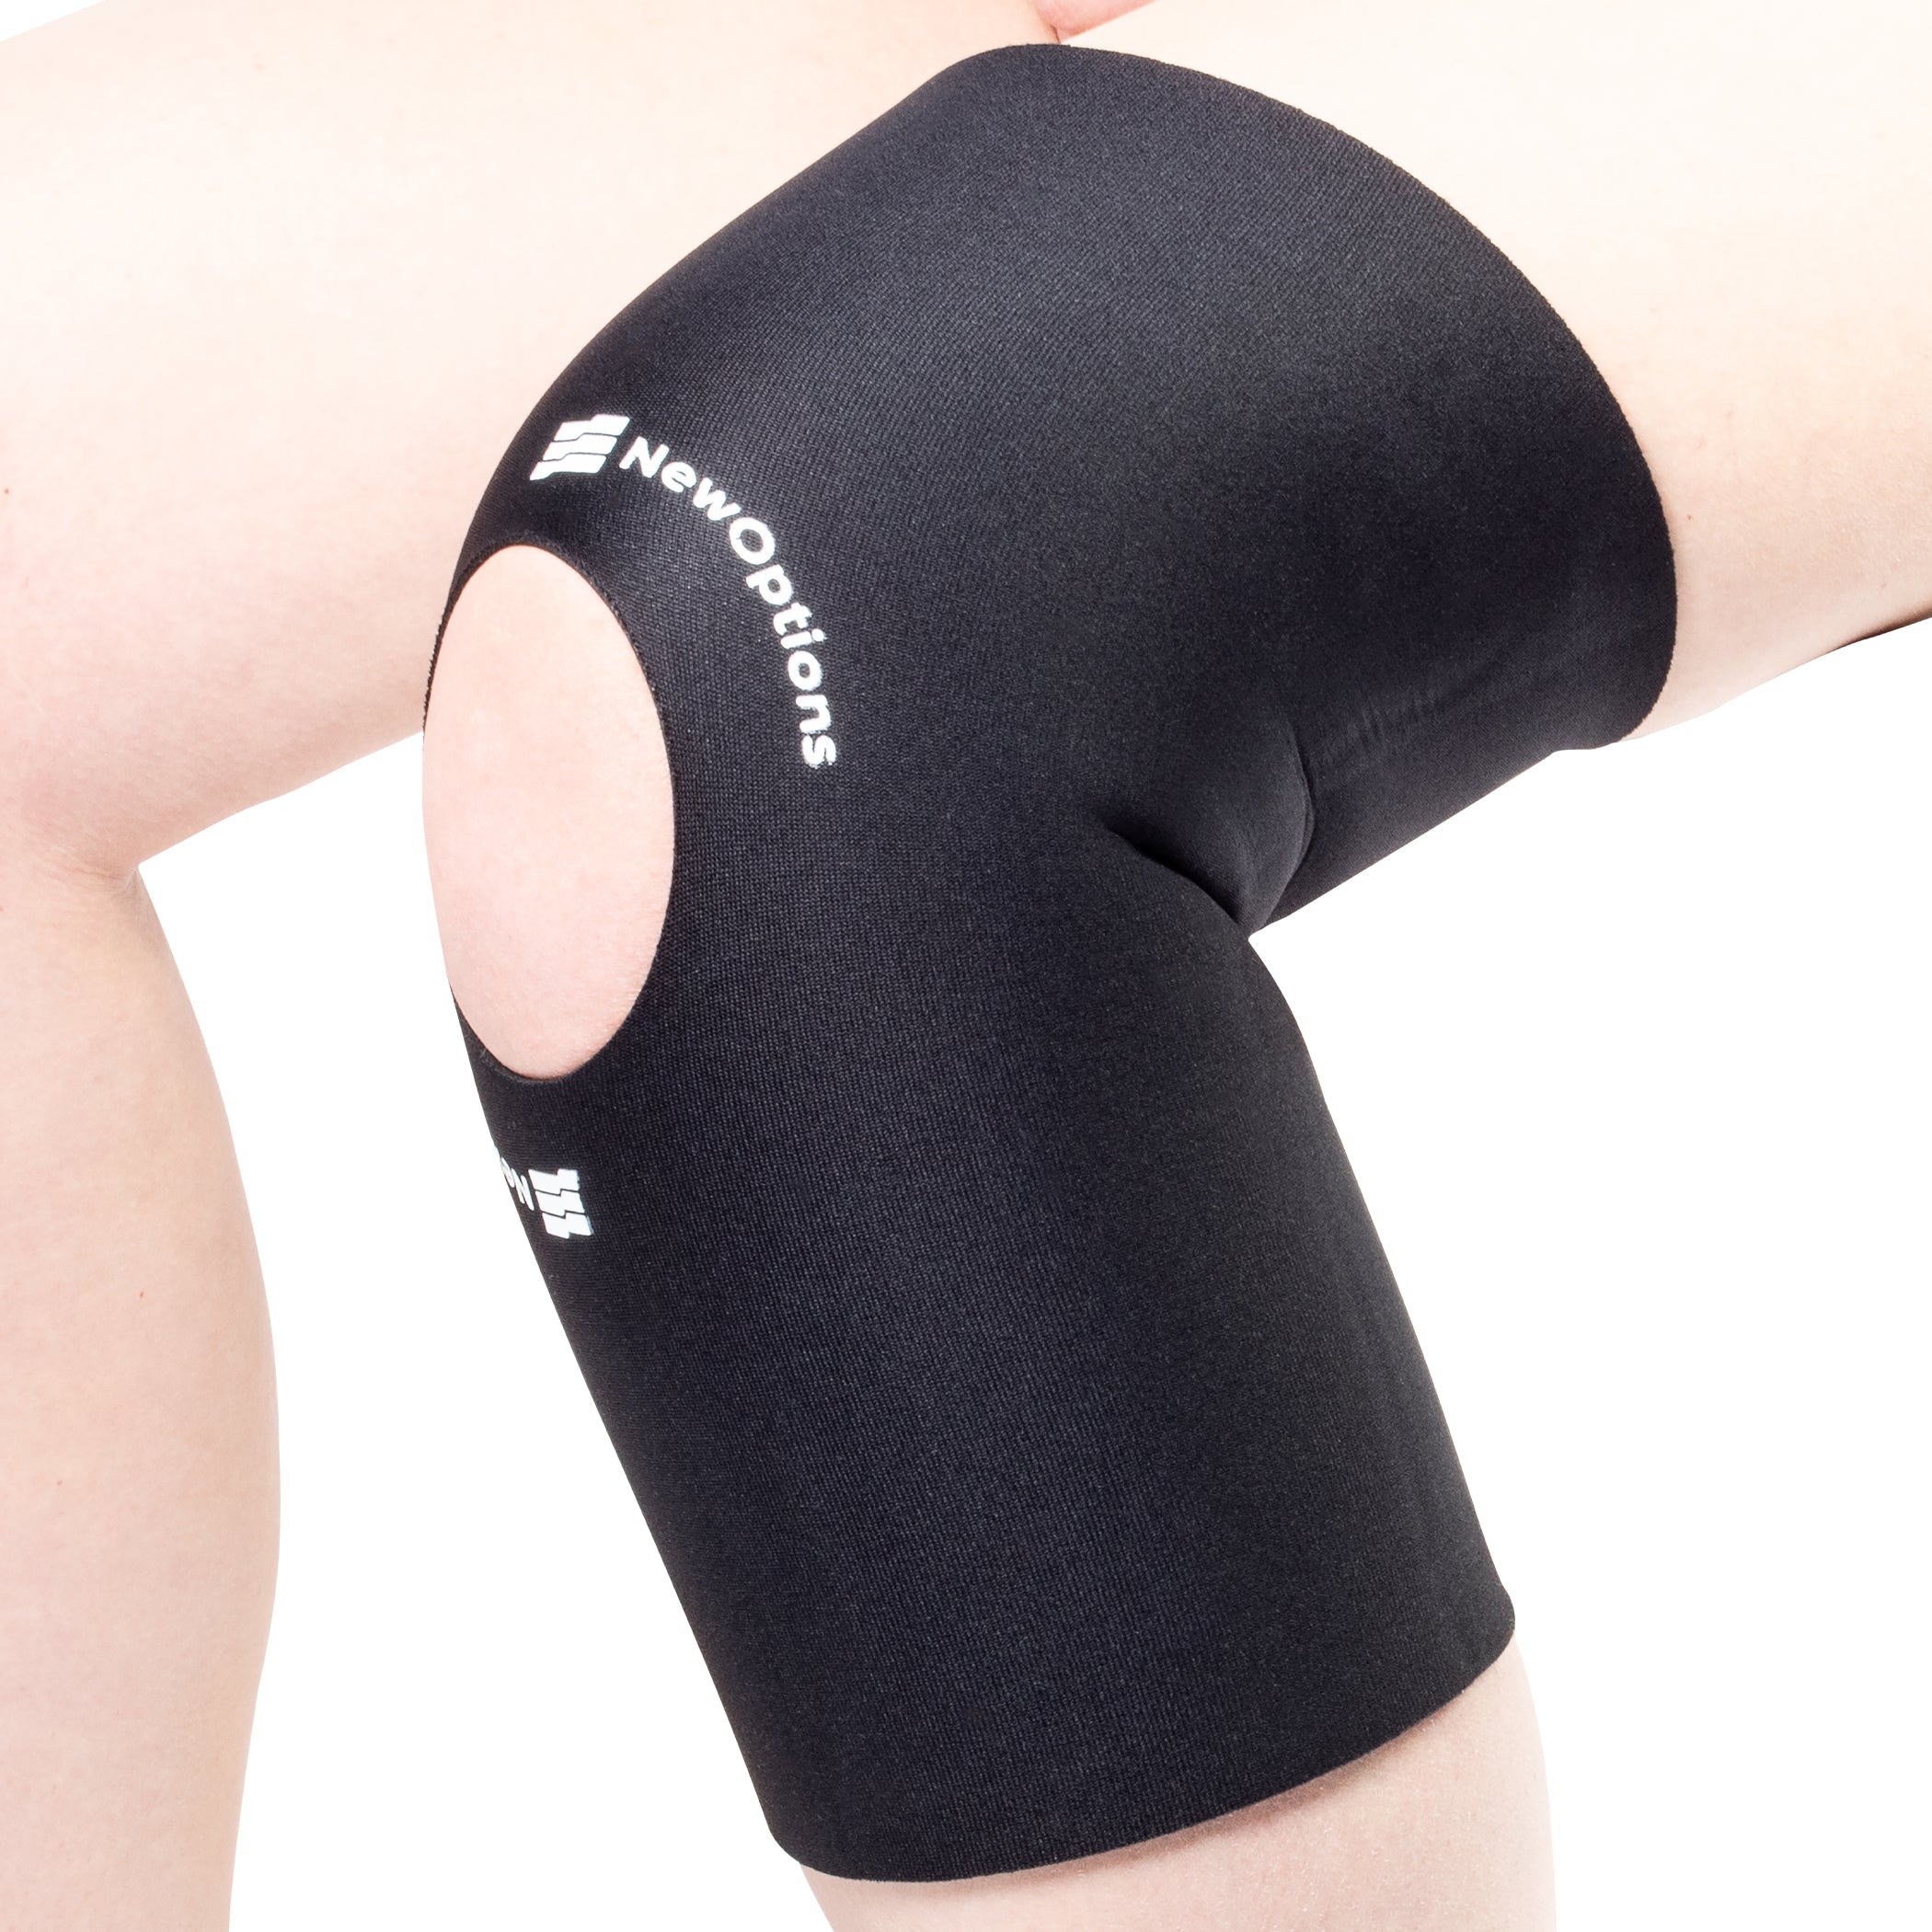 The Knee Sleeve. 2-sided Neoprene (K9-O) – New Options Sports